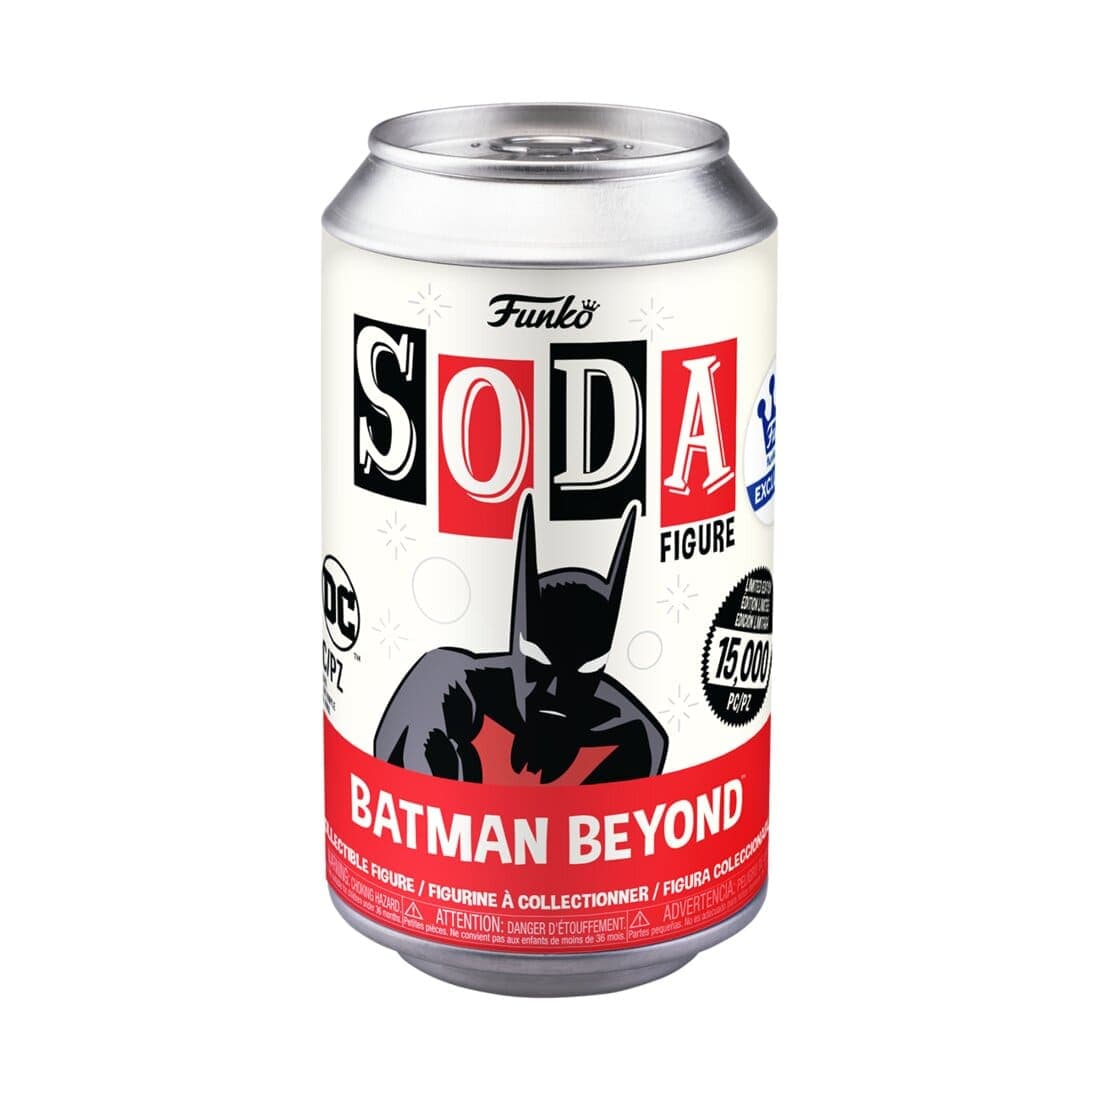 Funko Soda - Batman Beyond exclusivo Funko Shop